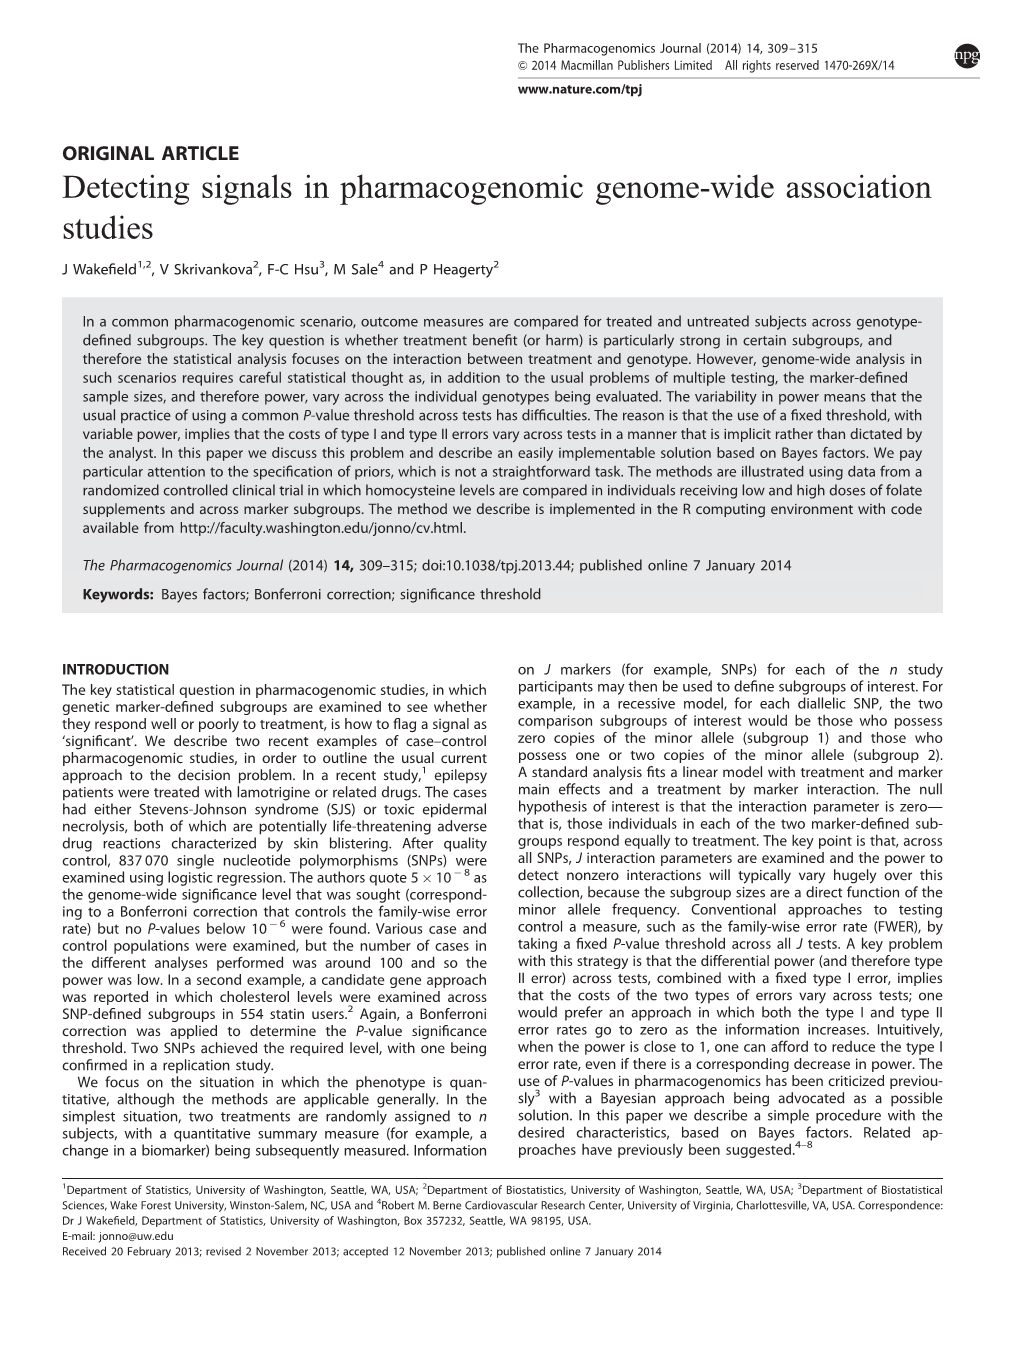 Detecting Signals in Pharmacogenomic Genome-Wide Association Studies